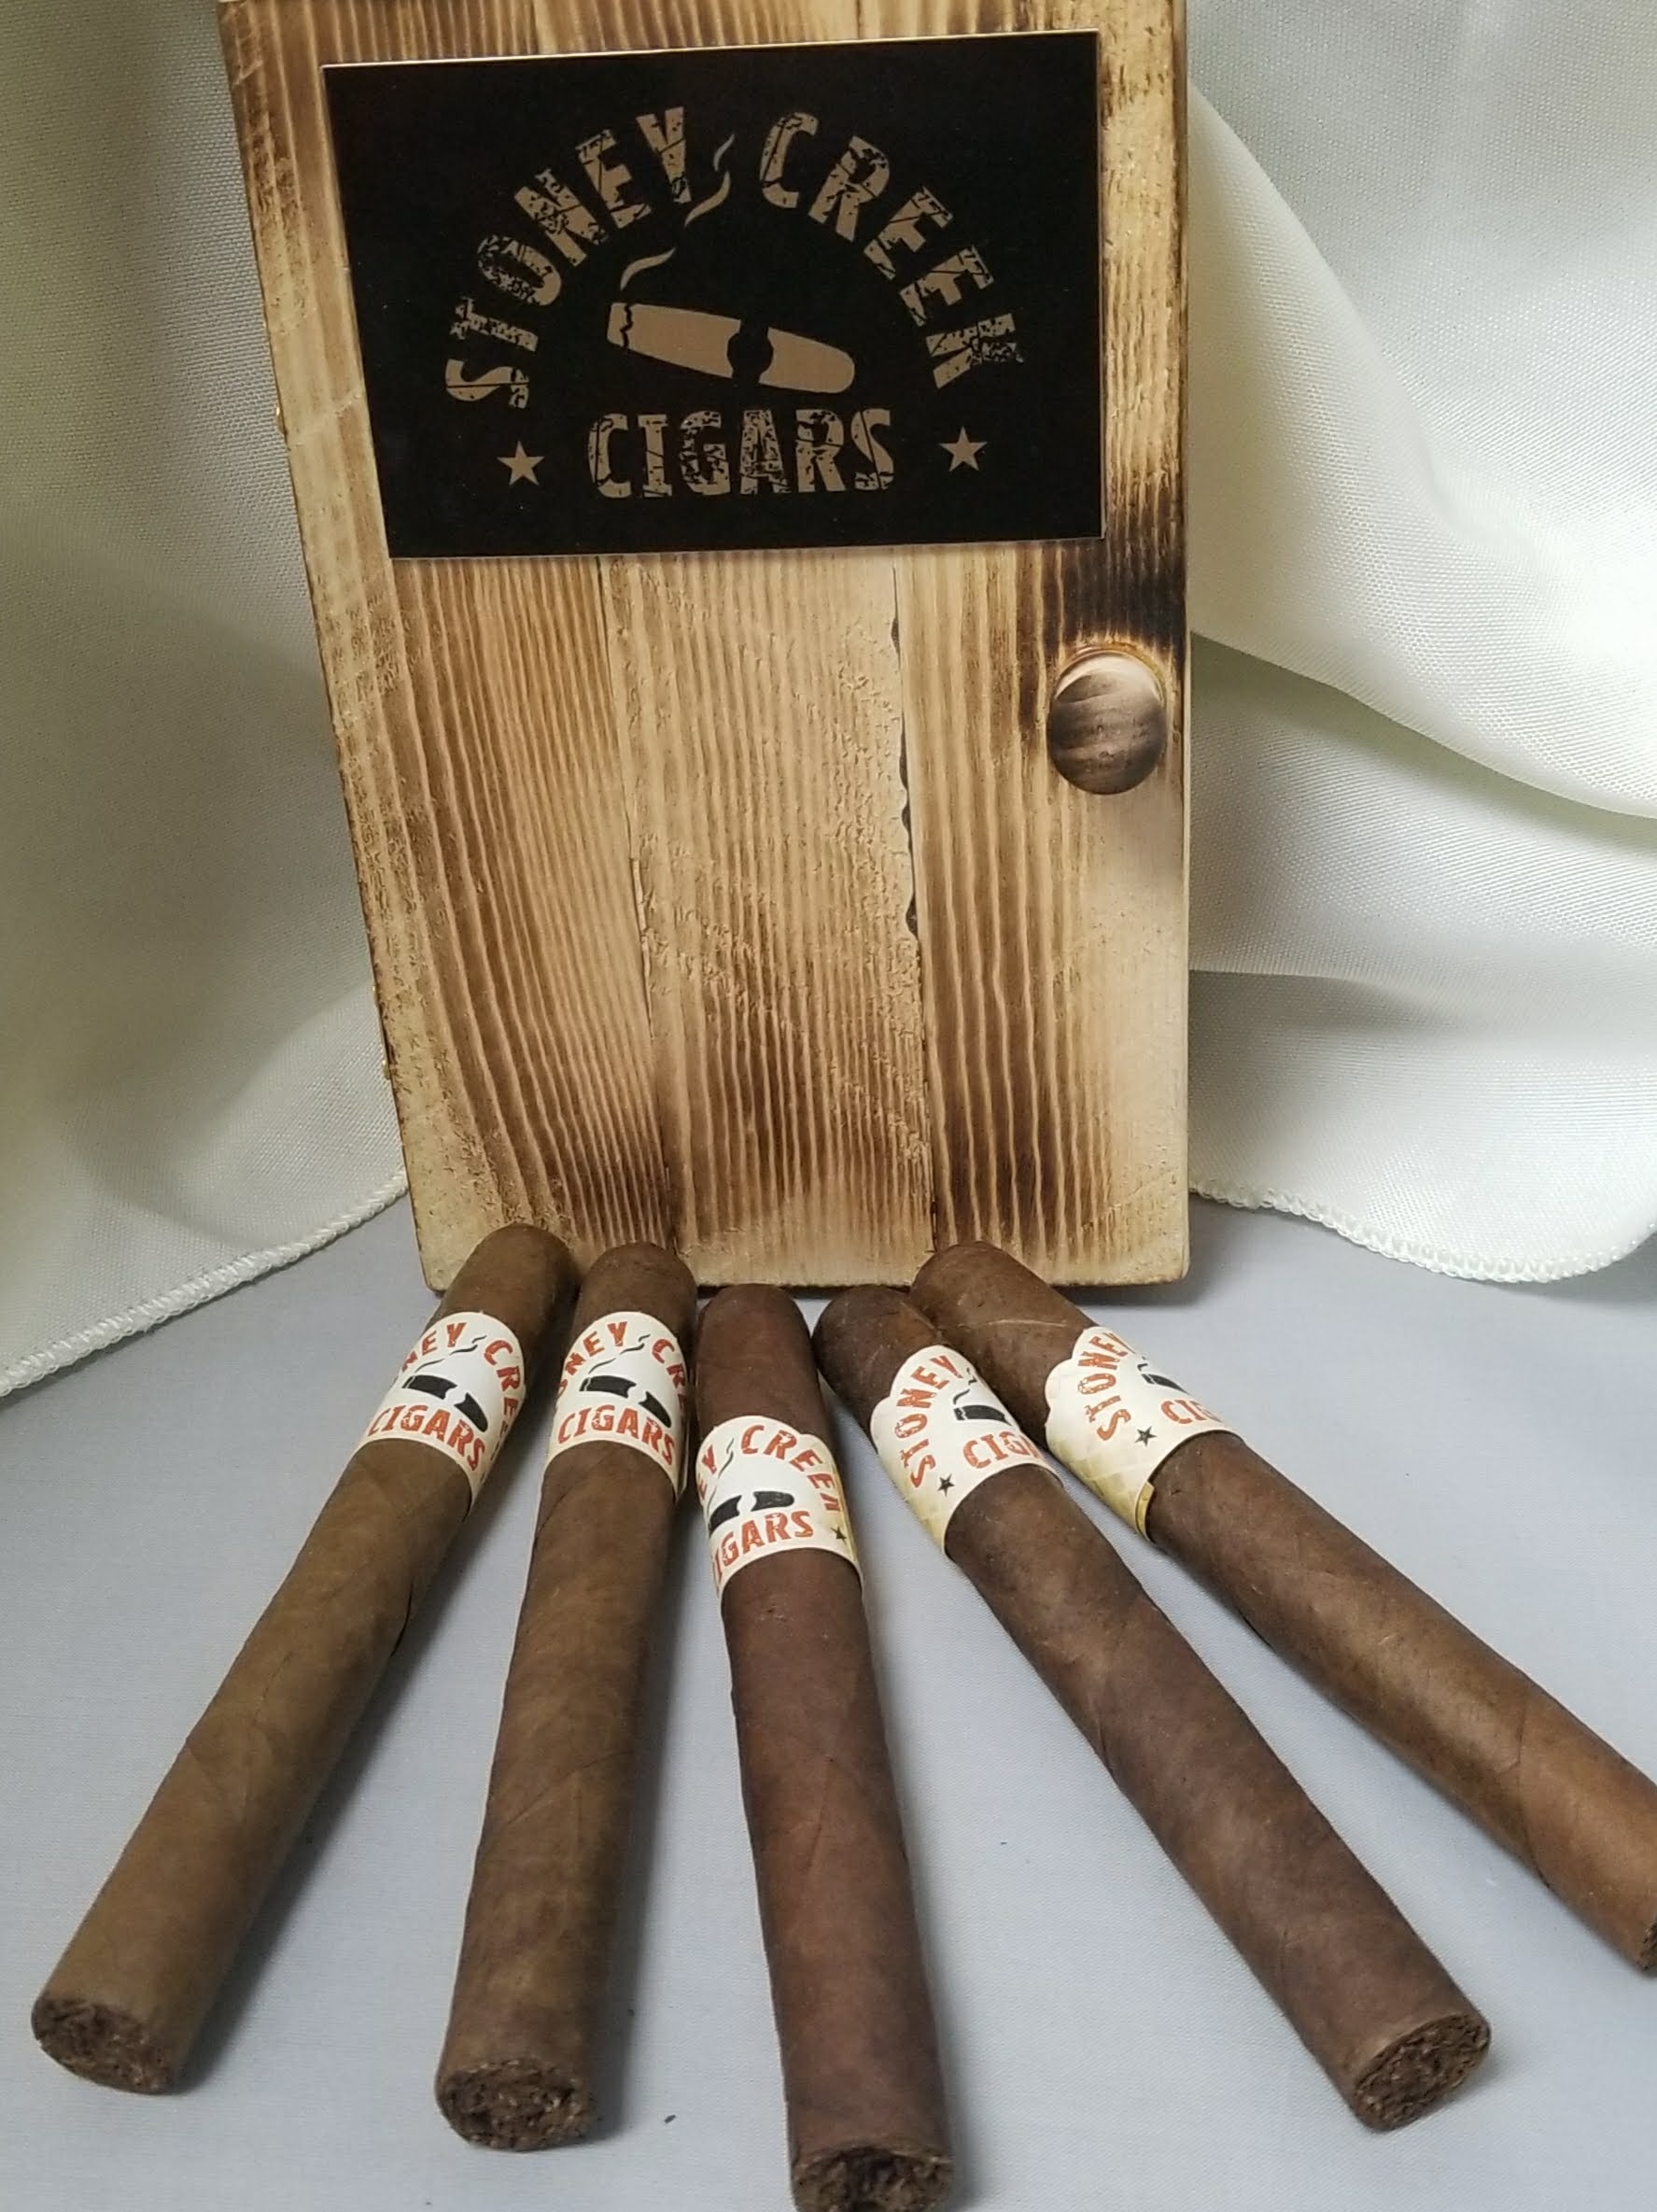 Spiced Rum cigar - 5 pack